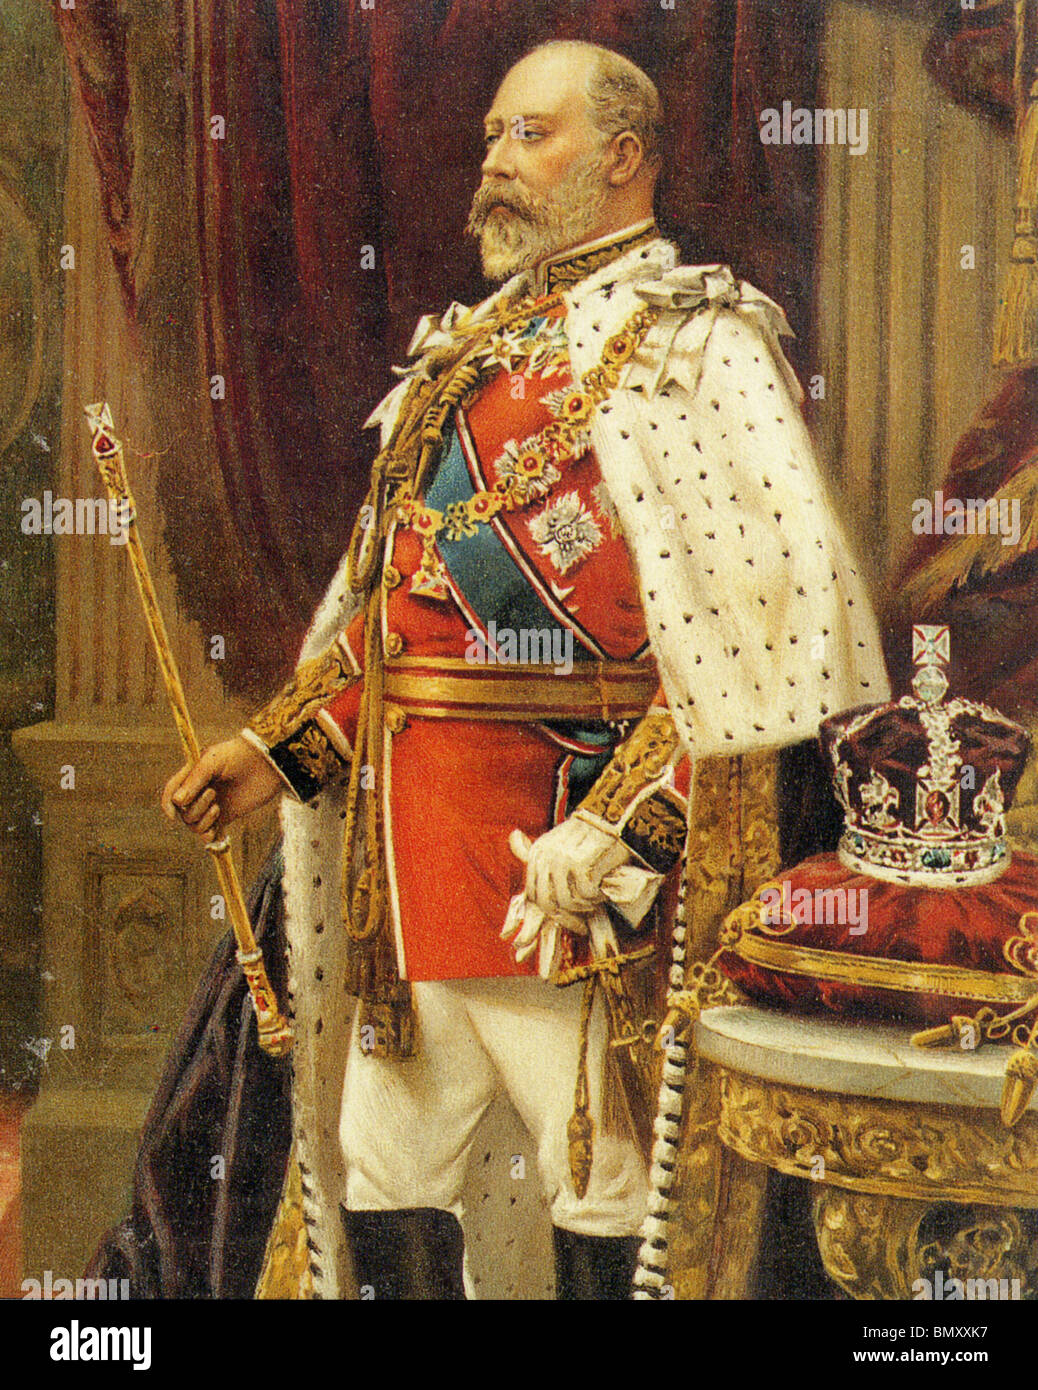 El Rey Eduardo VII del Reino Unido (1841-1910) Foto de stock